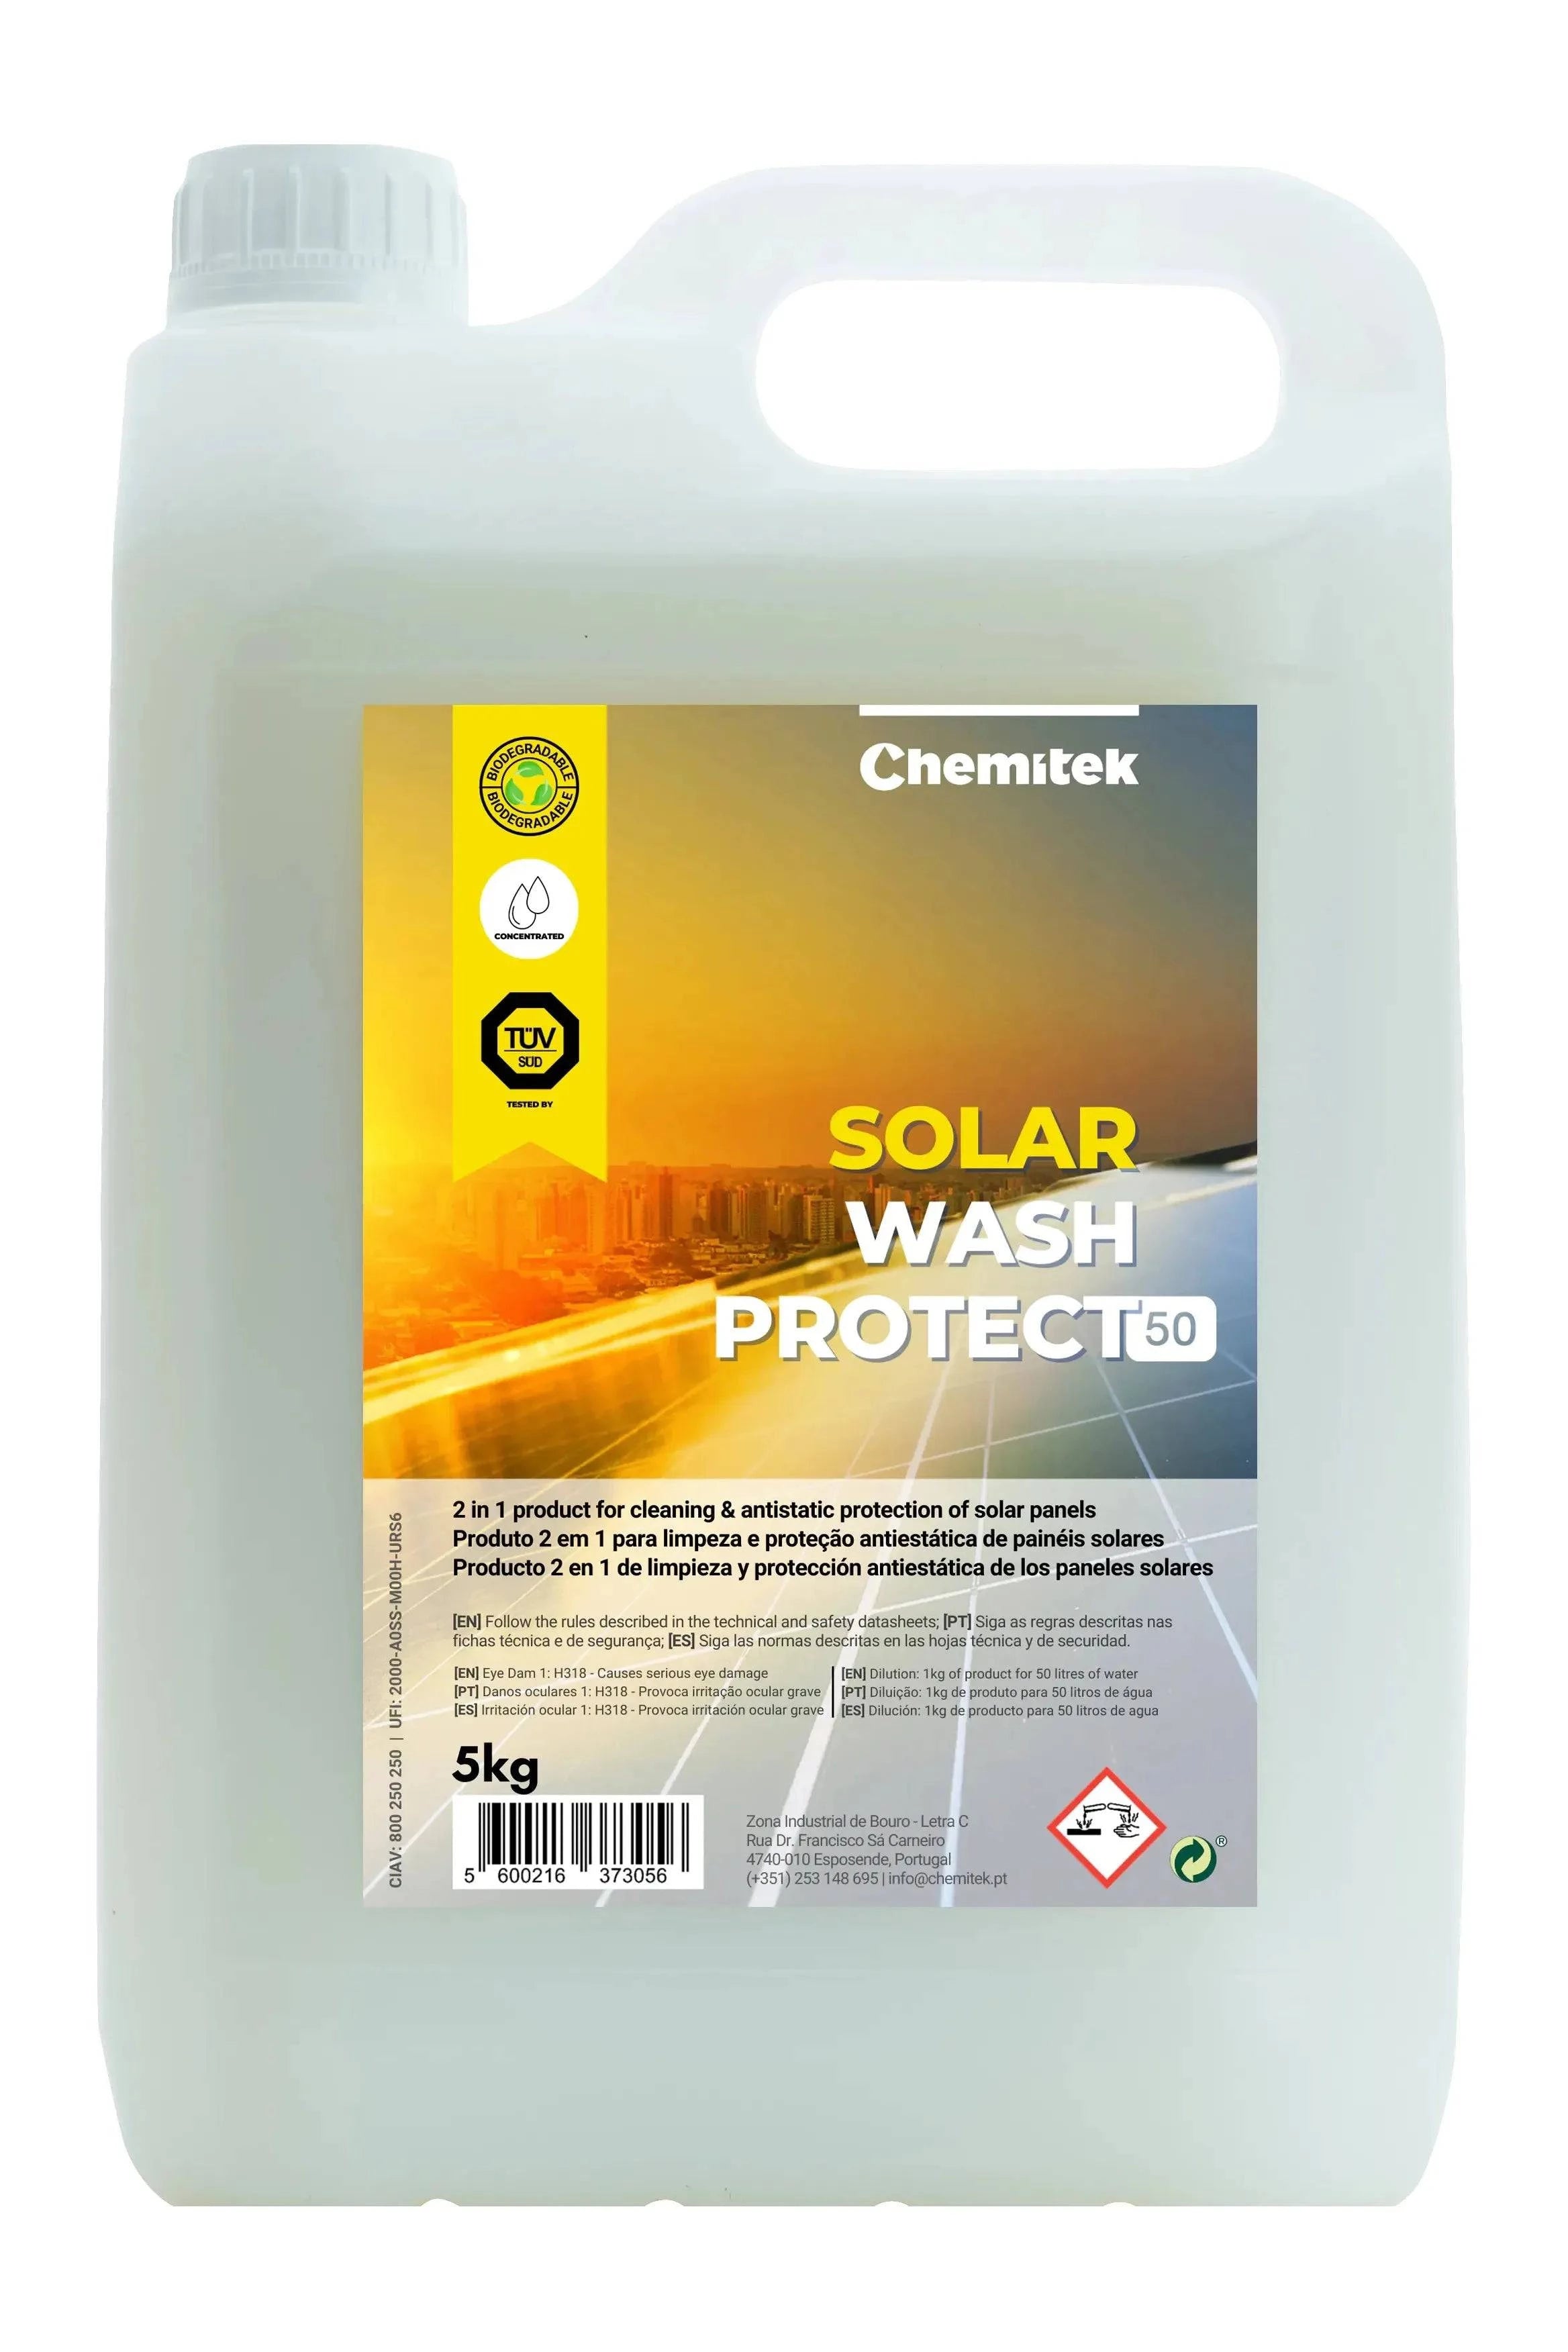 CHEMITEK SOLAR WASH PROTECT 50 5KG - Elite Renewable Solutions